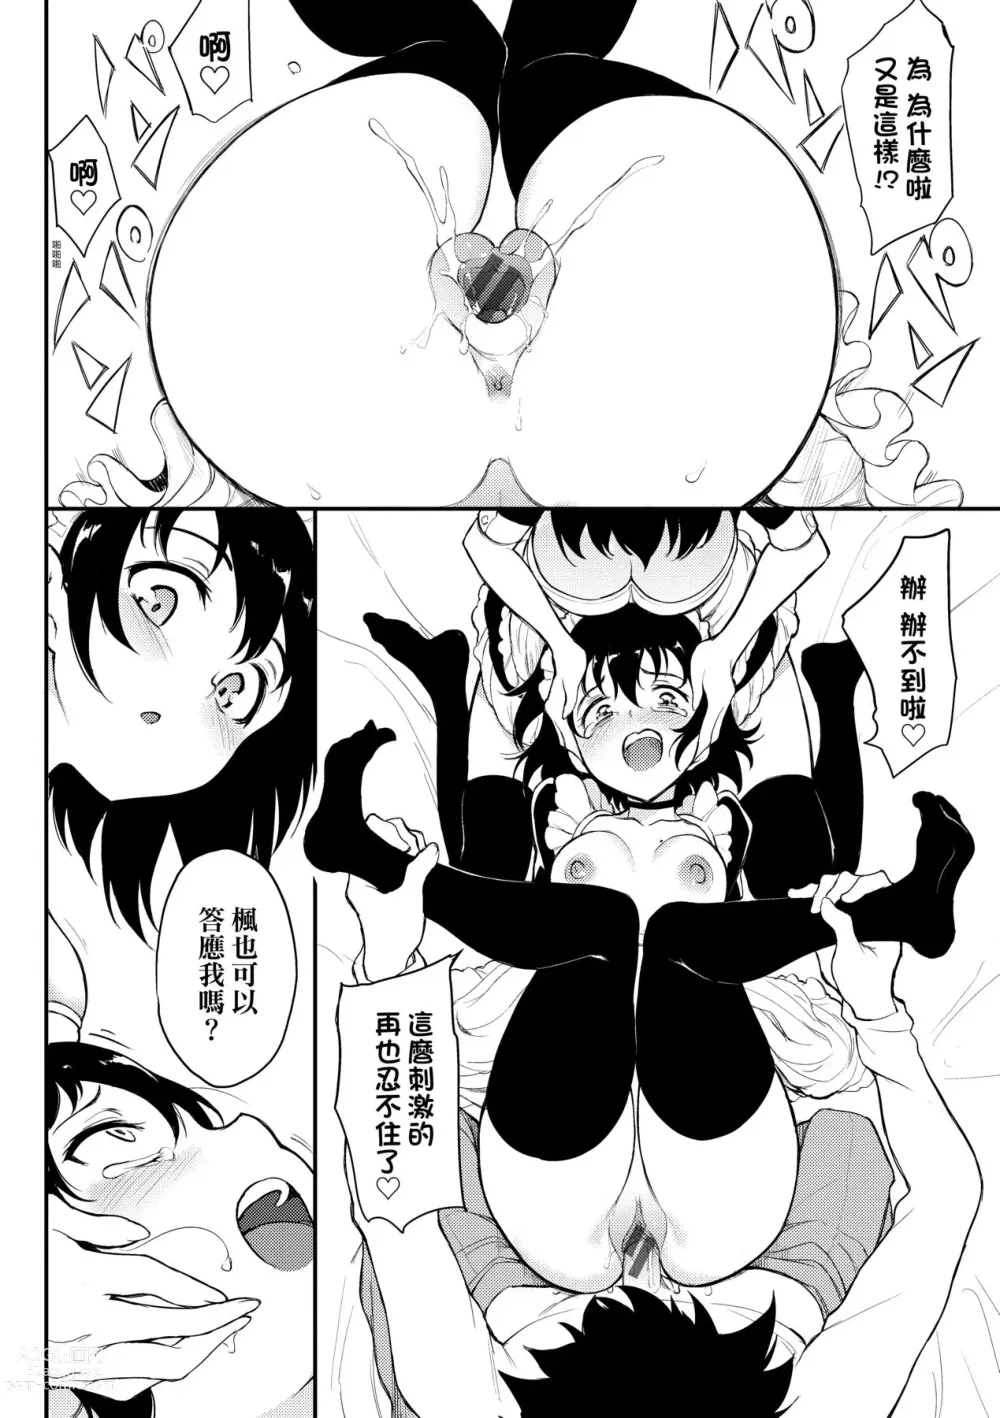 Page 197 of manga 珍愛著你